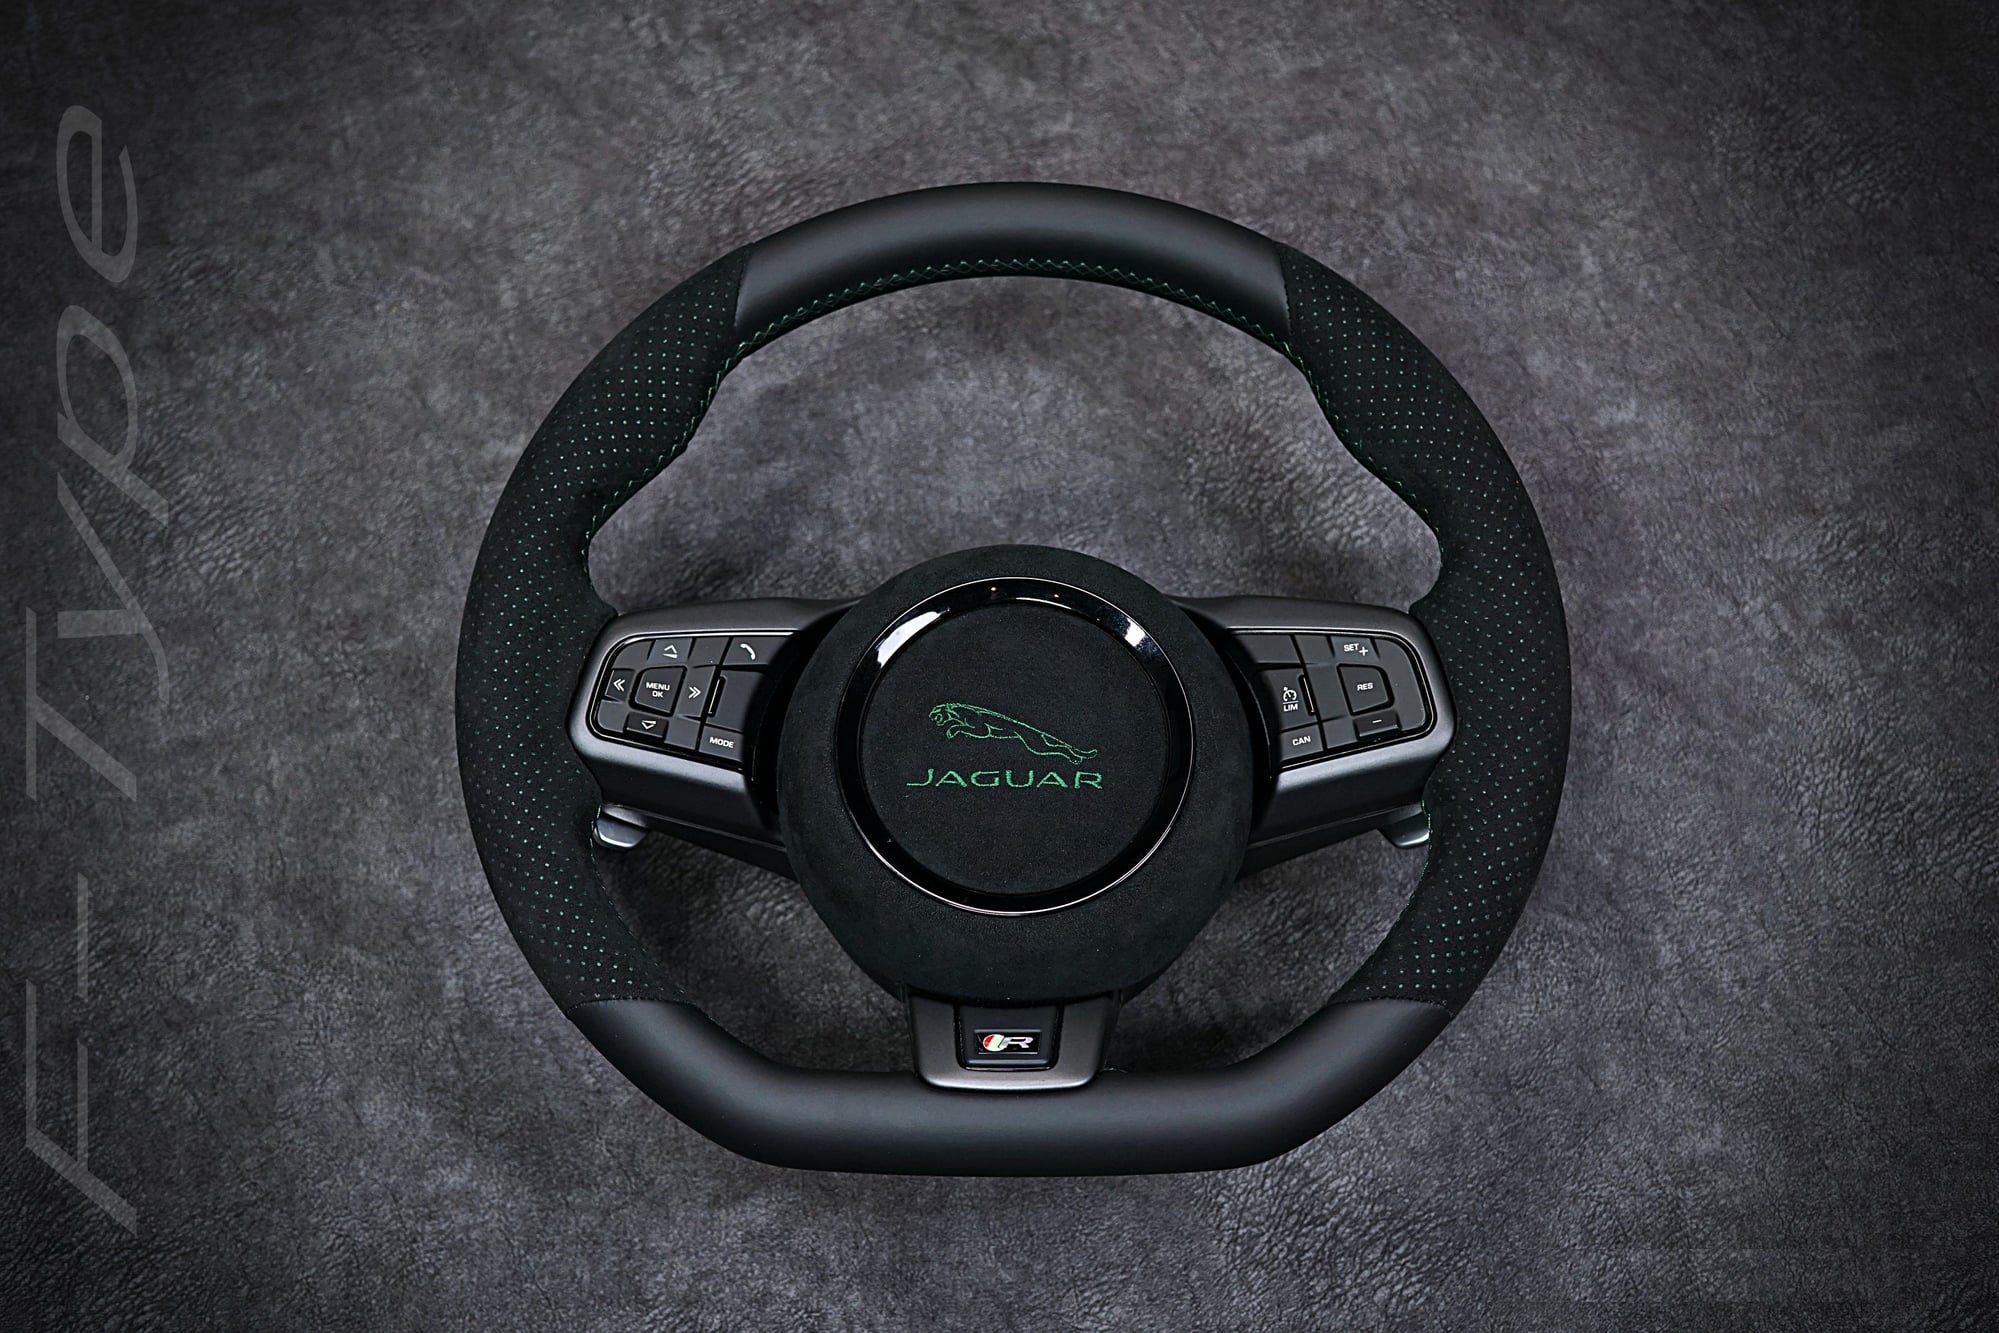 Interior/Upholstery - Customized steering wheel - flat bottom non heated - Used - 2016 to 2020 Jaguar F-Type - Krakow, Poland